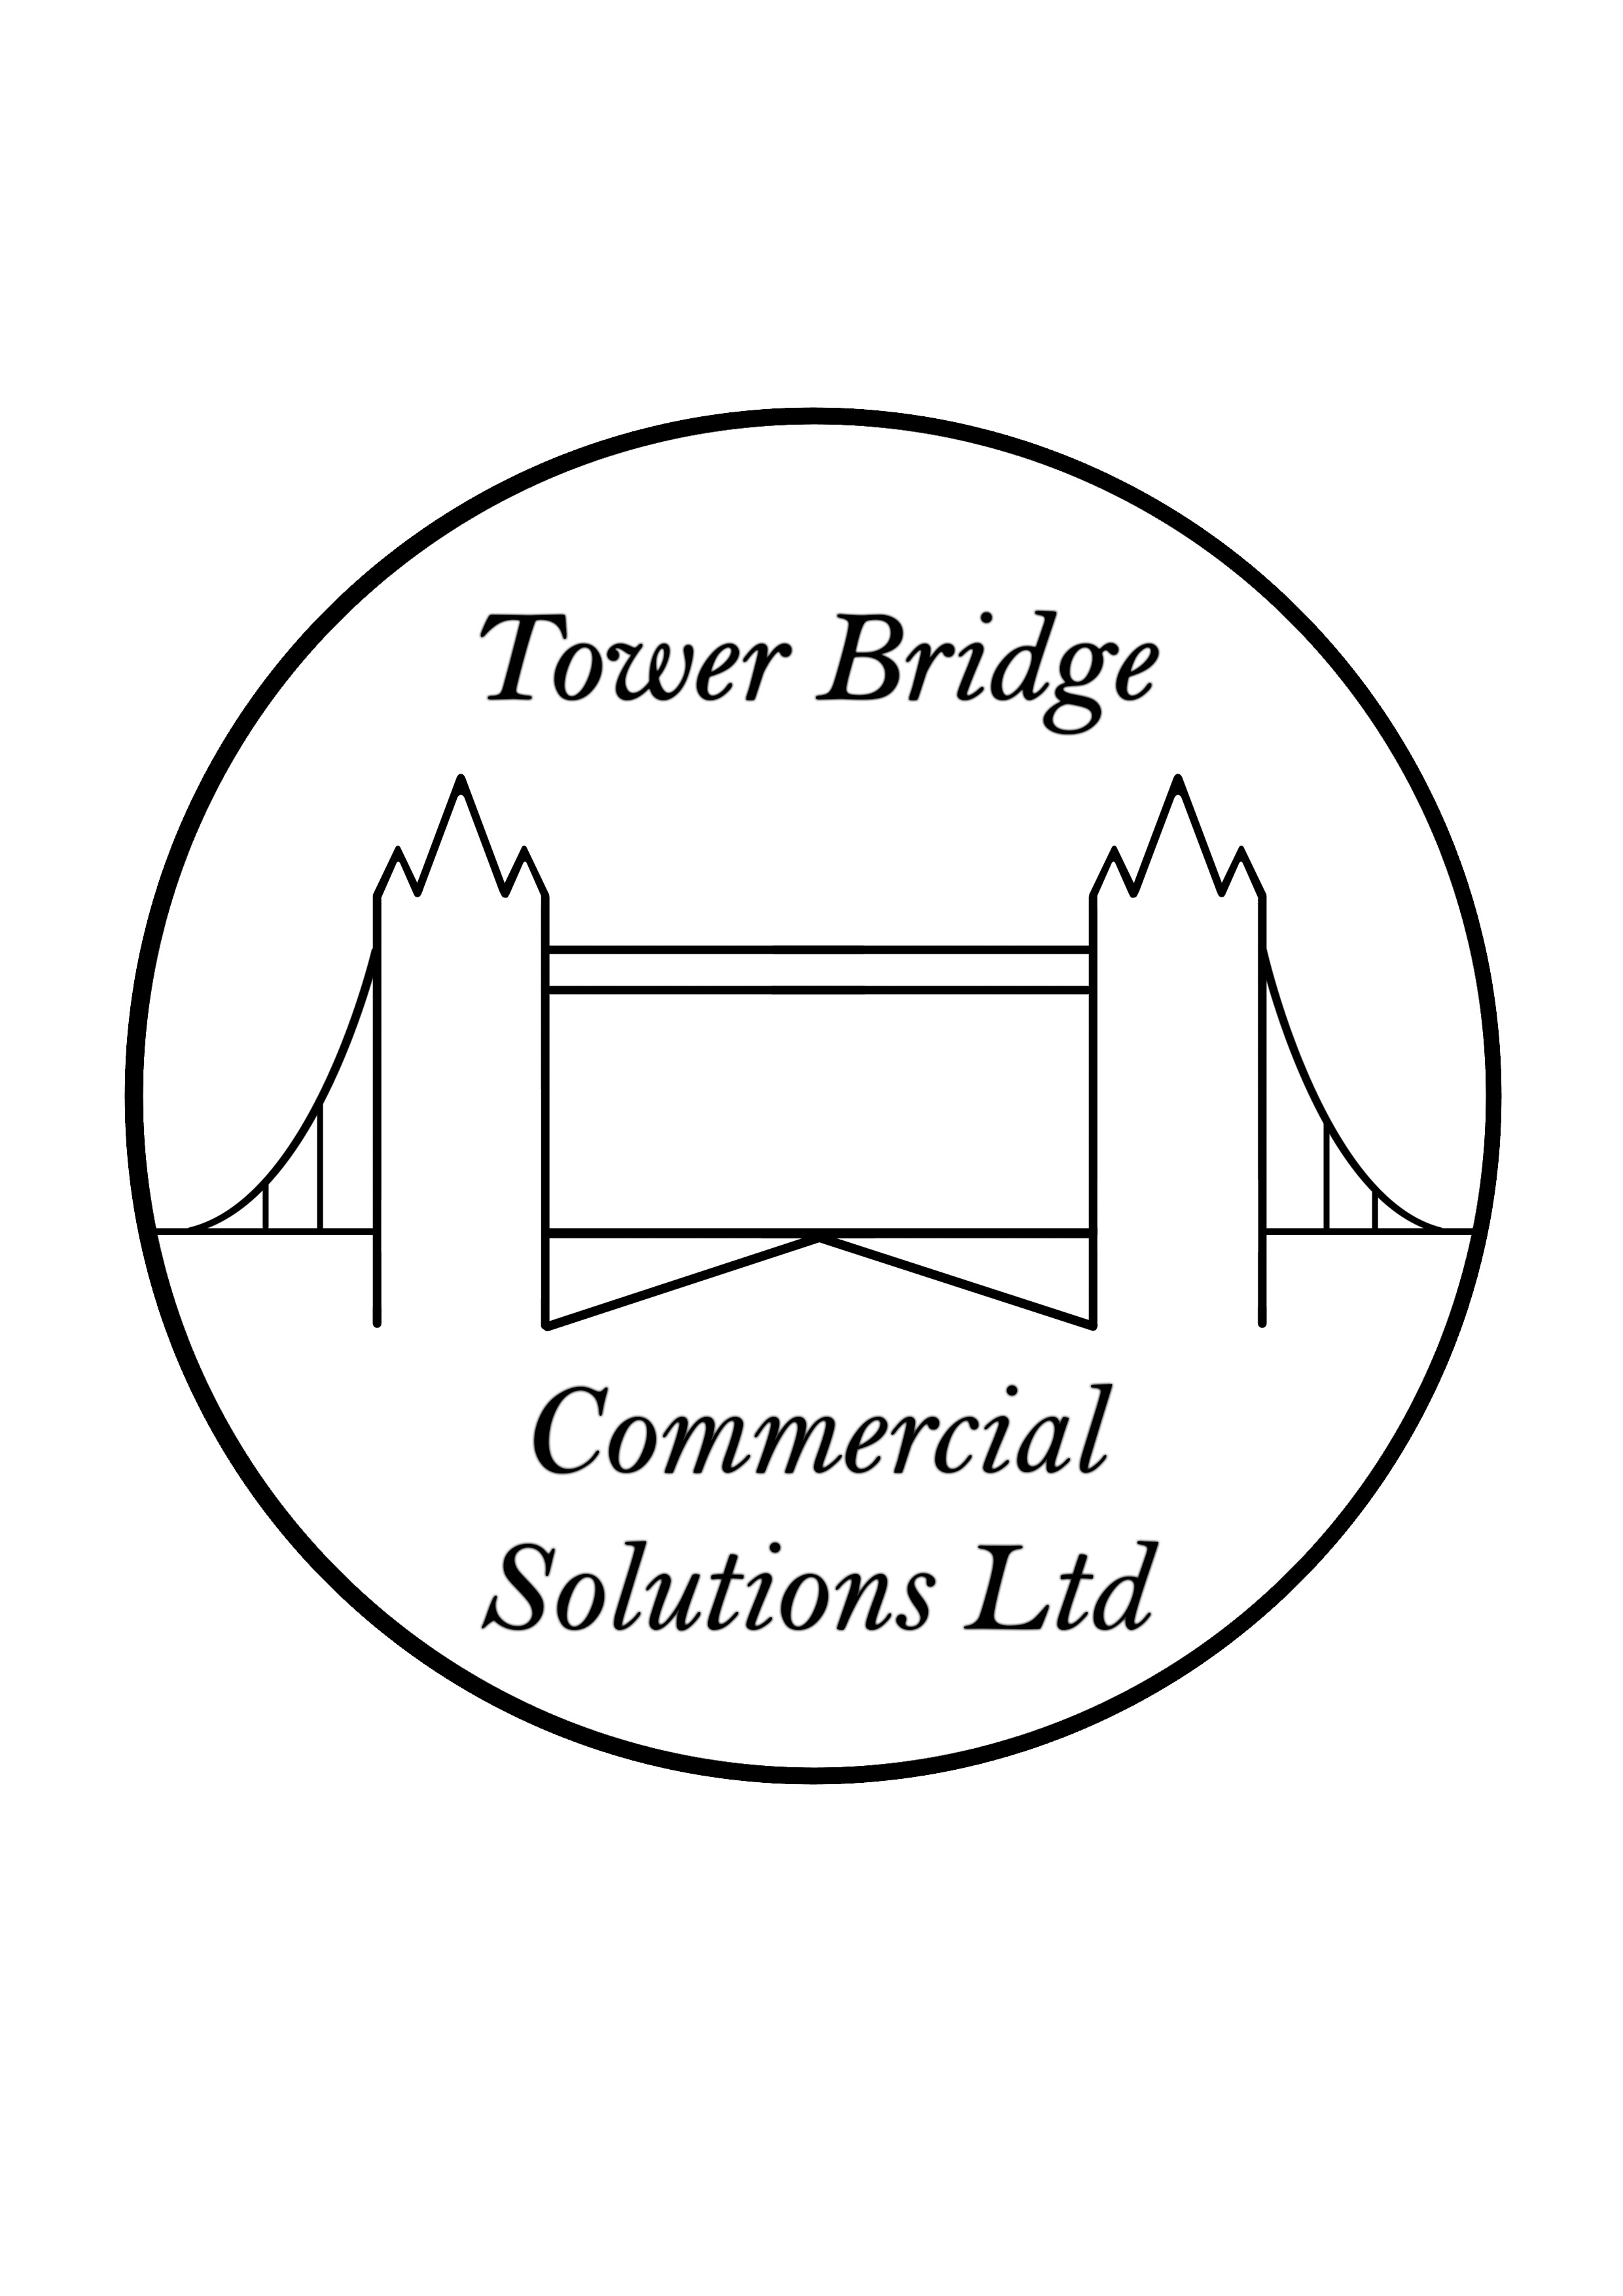 Tower Bridge Commercial Solutions Ltd